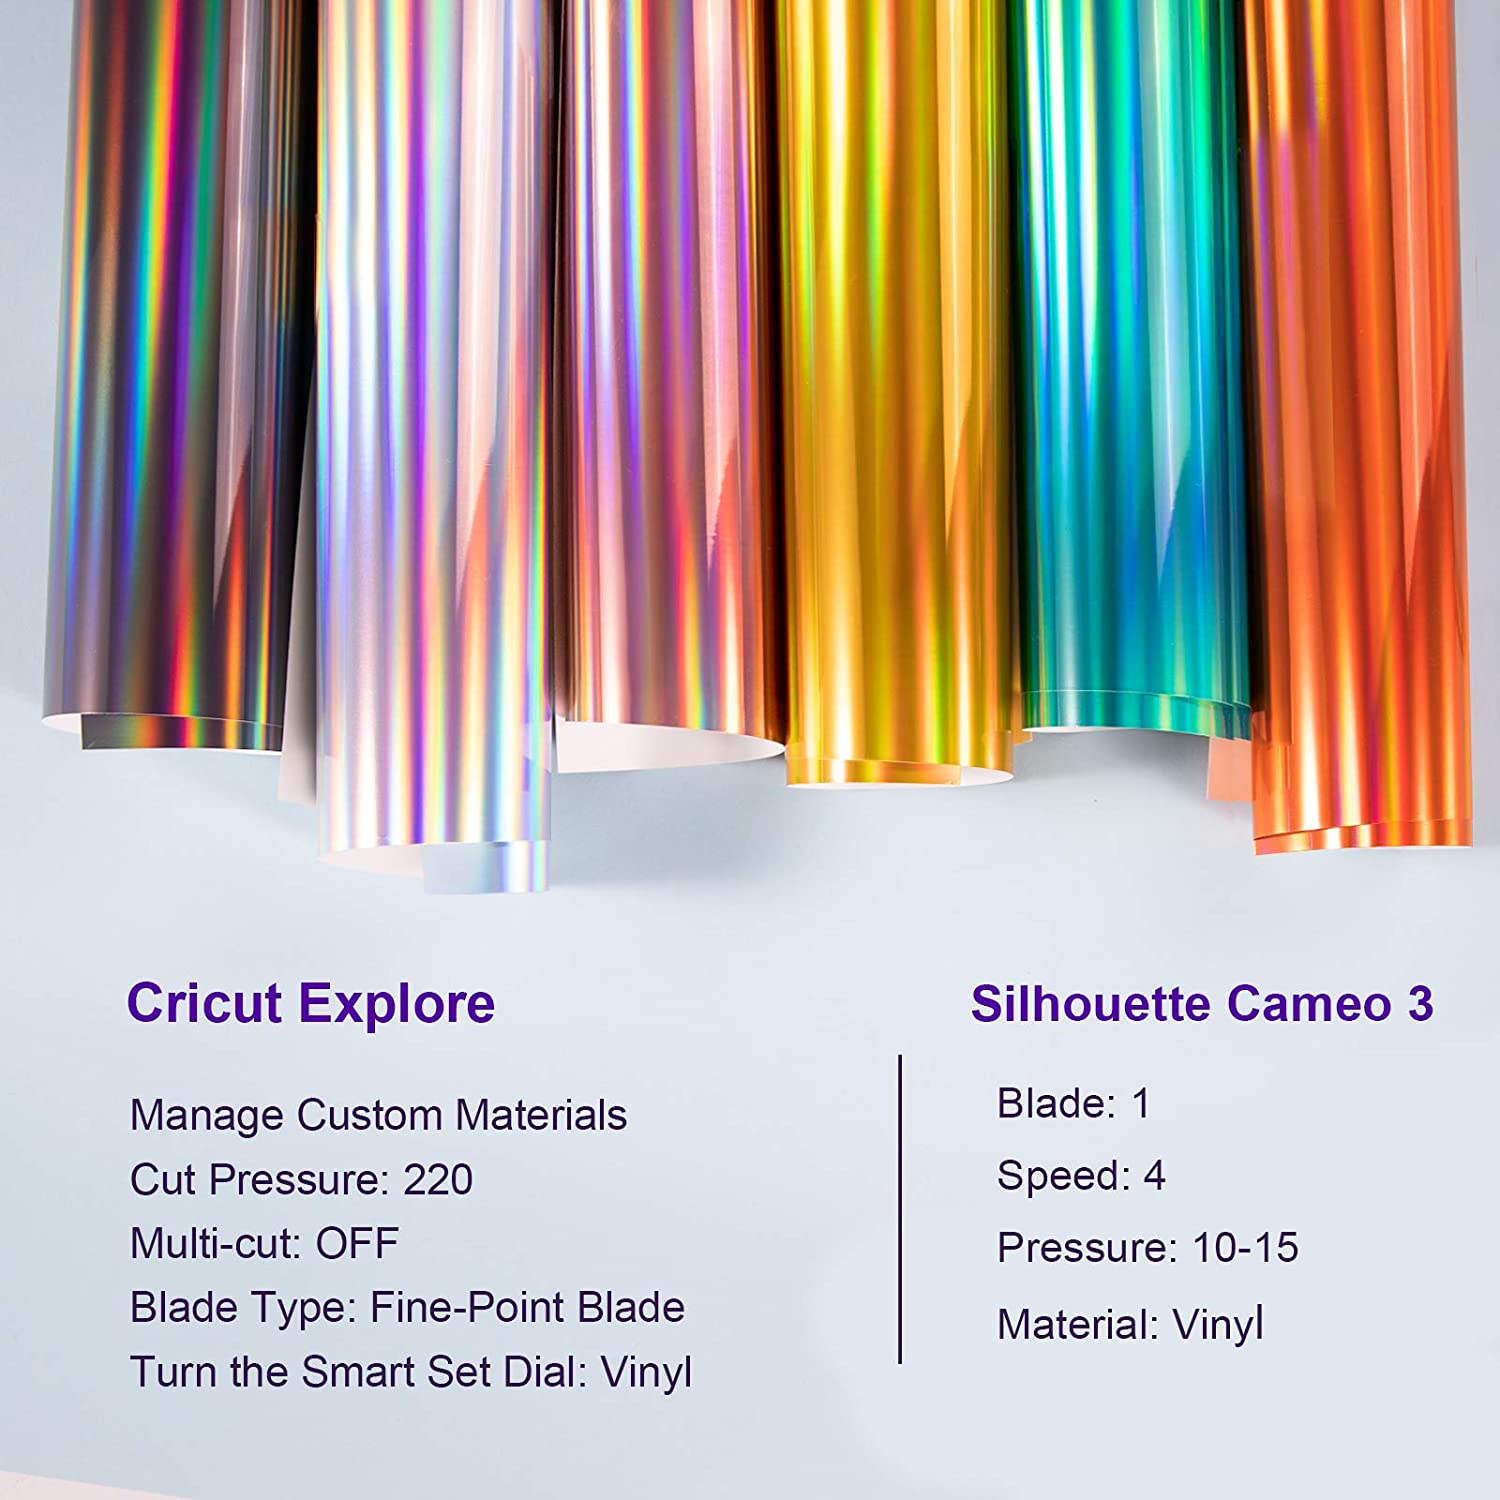 Holographic Vinyl Sheet Reflective Rainbow Permanent Adhesive Cutting Vinyl  - China Holographic Vinyl, Holographic Rainbow Vinyl